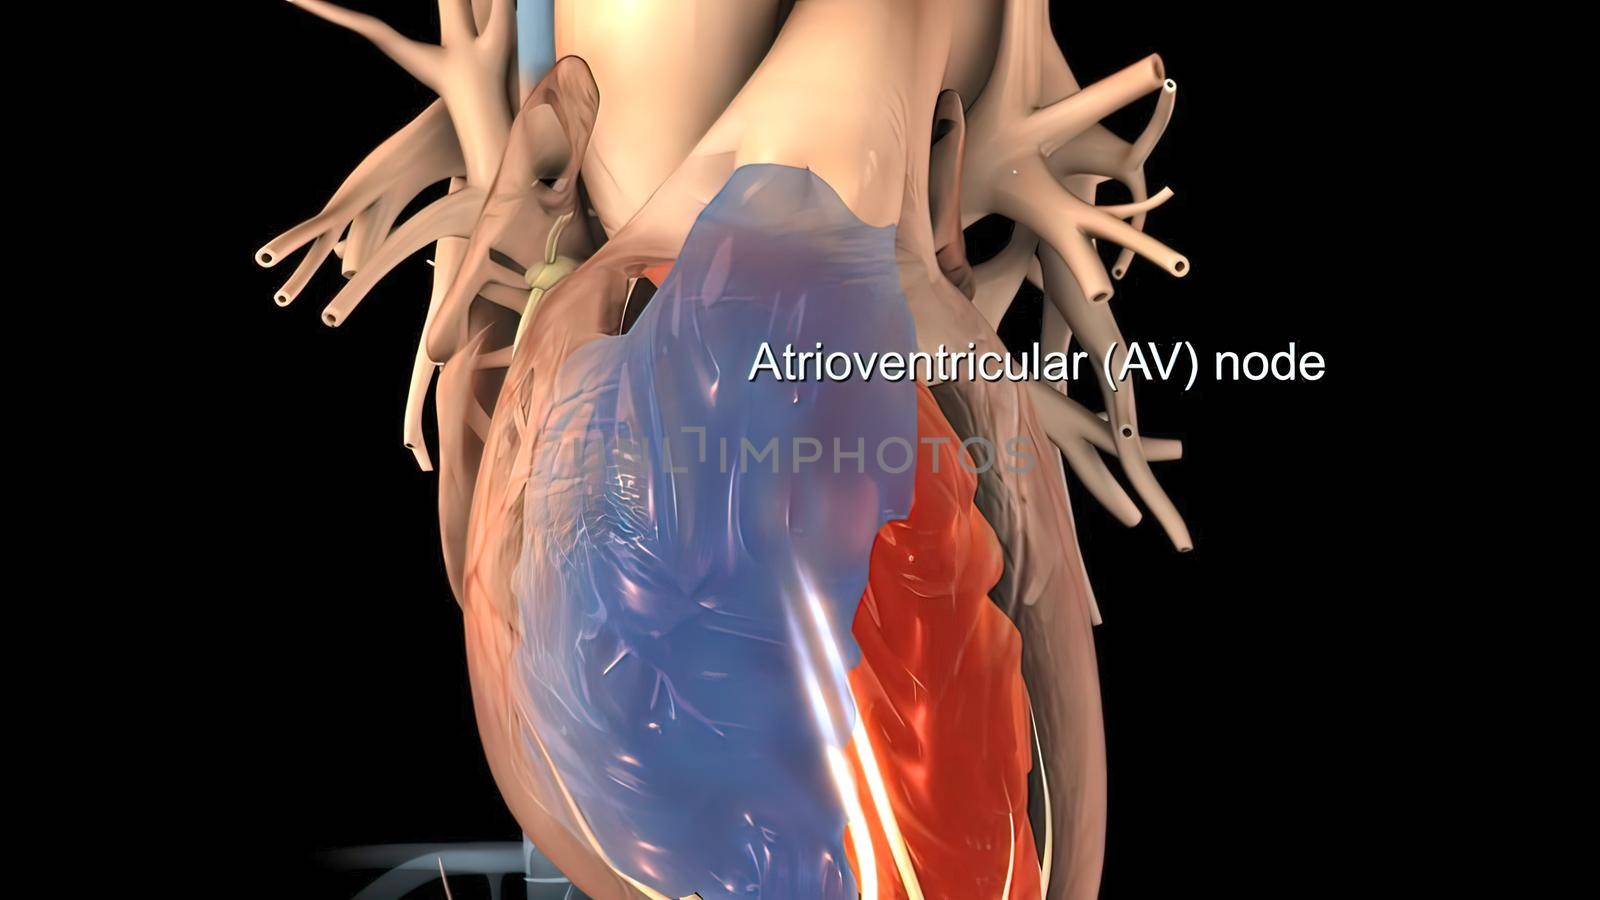 Heart Anatomy AV atrioventricular node For Medical Concept 3D Illustration by creativepic